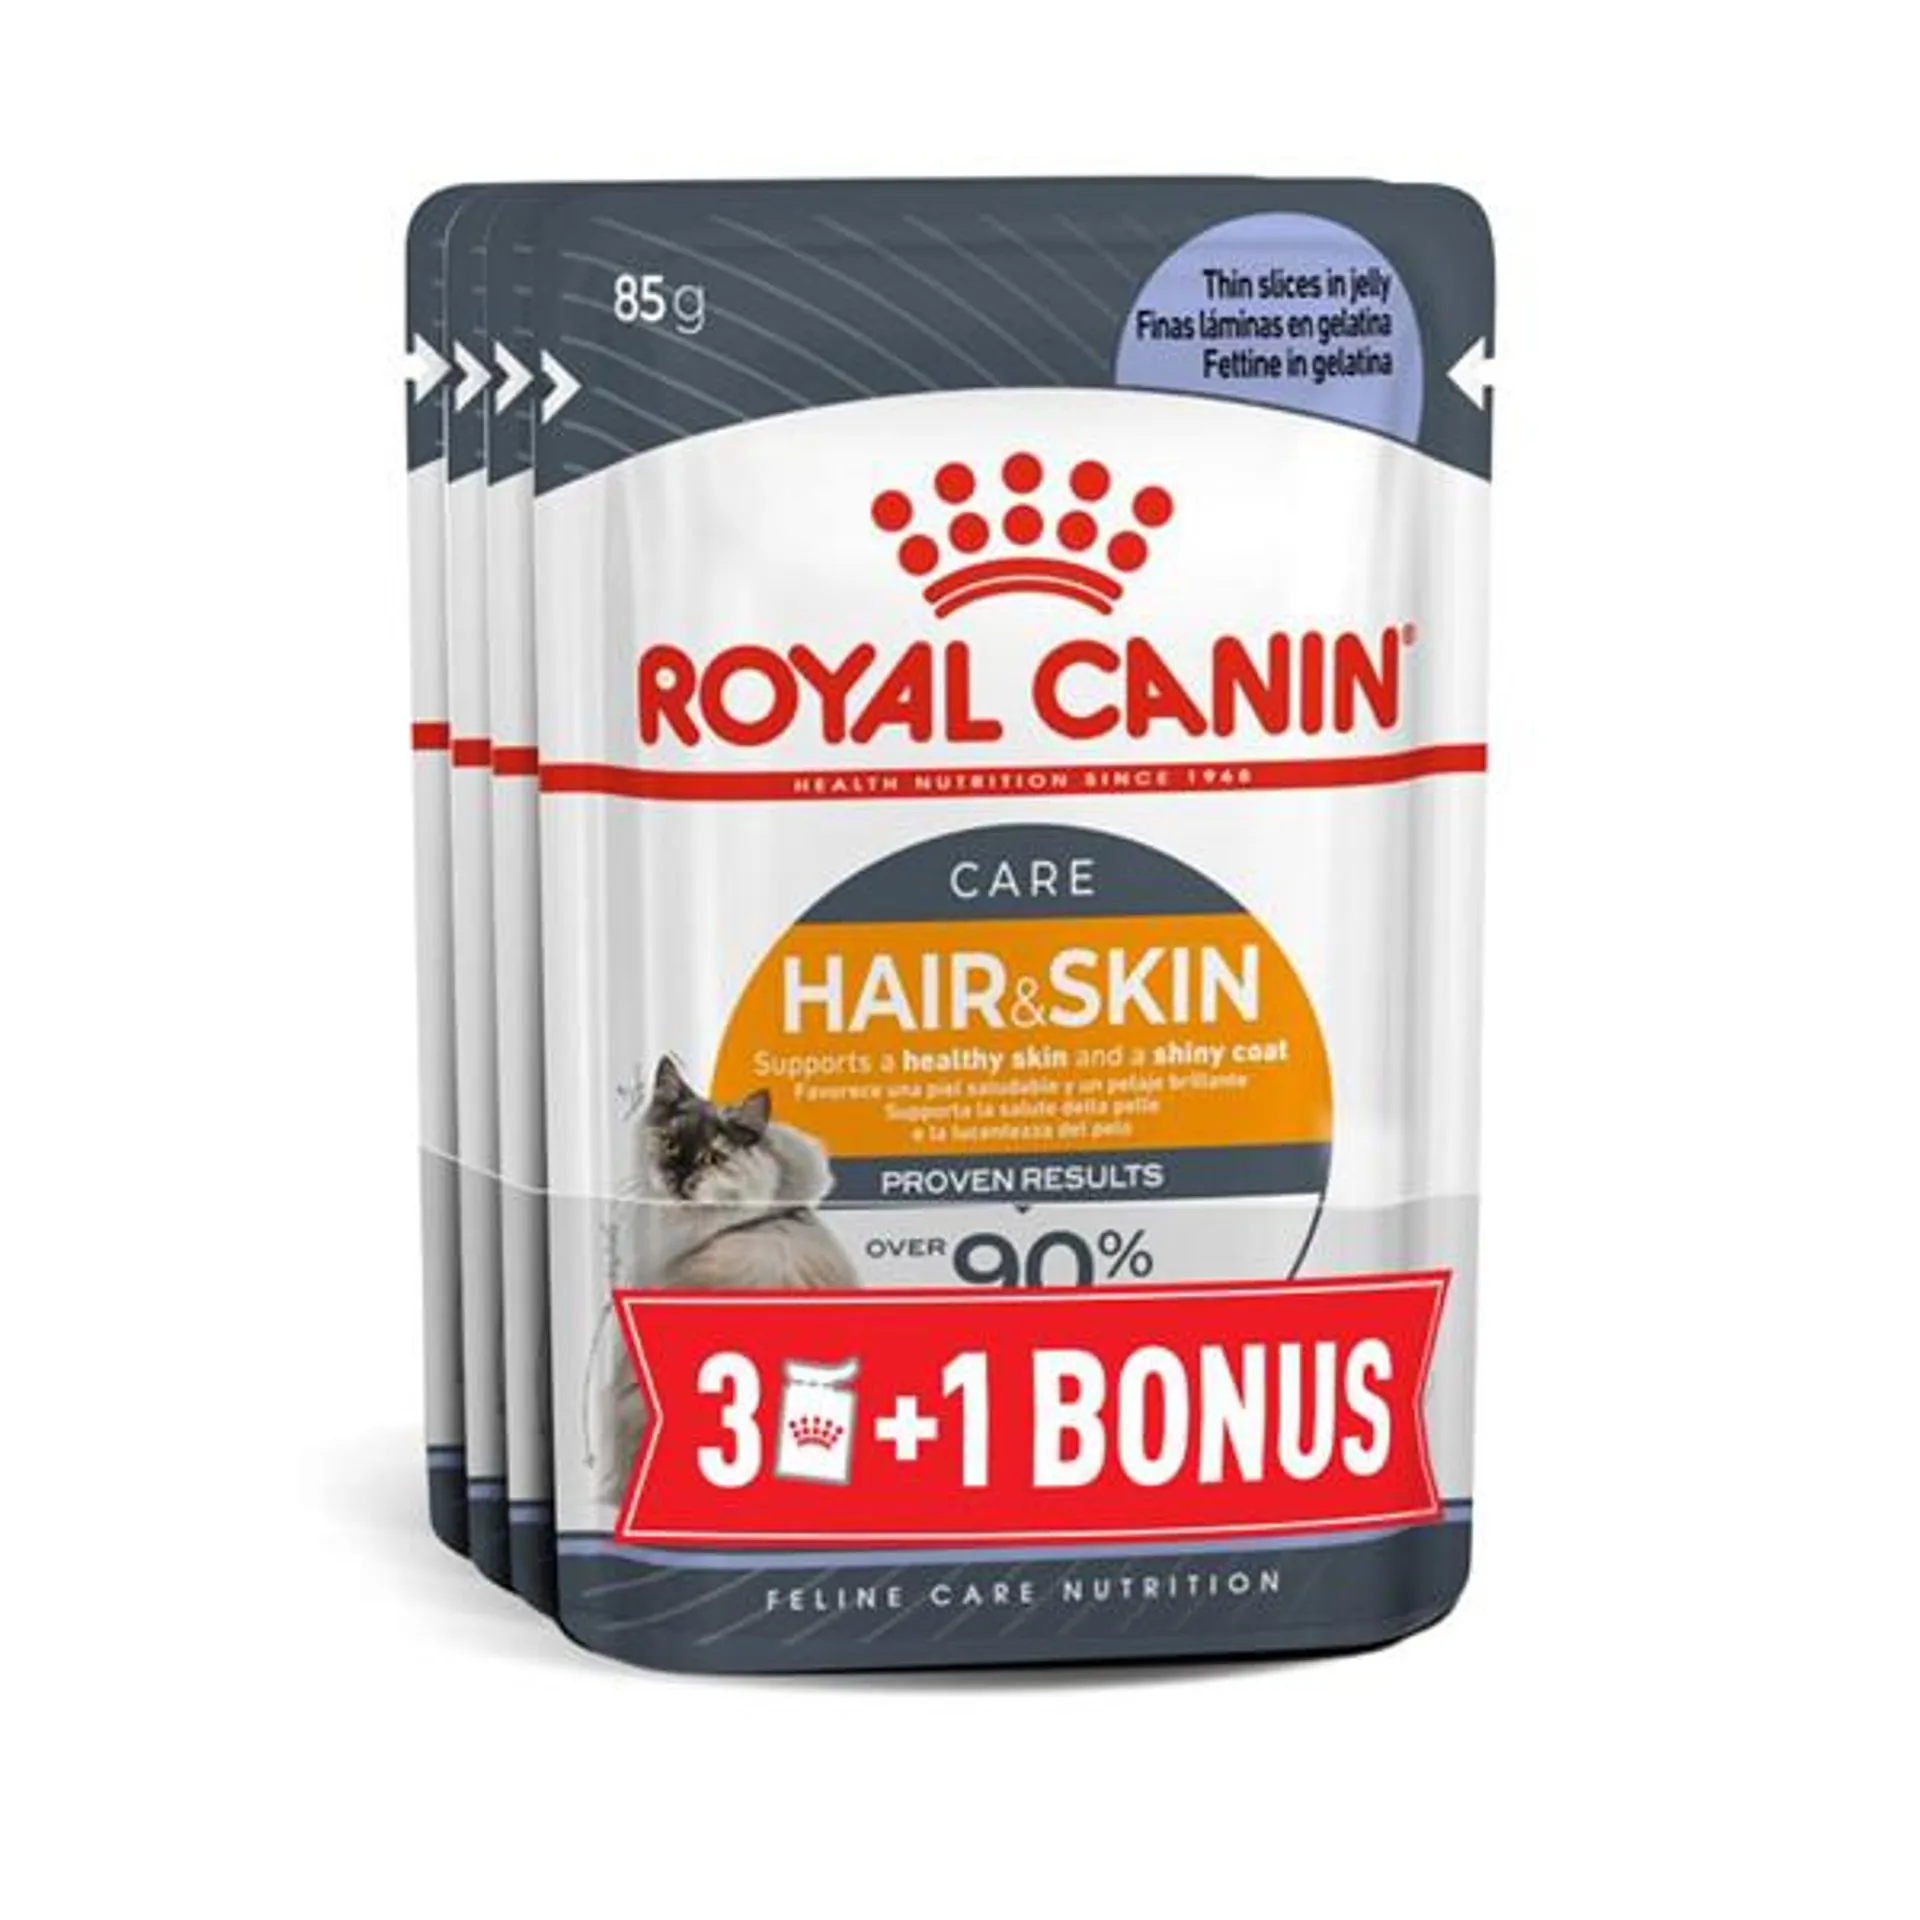 ROYAL CANIN vrećica za mačke FHN Intense Beauty u želeu 85g, 3+1 BONUS